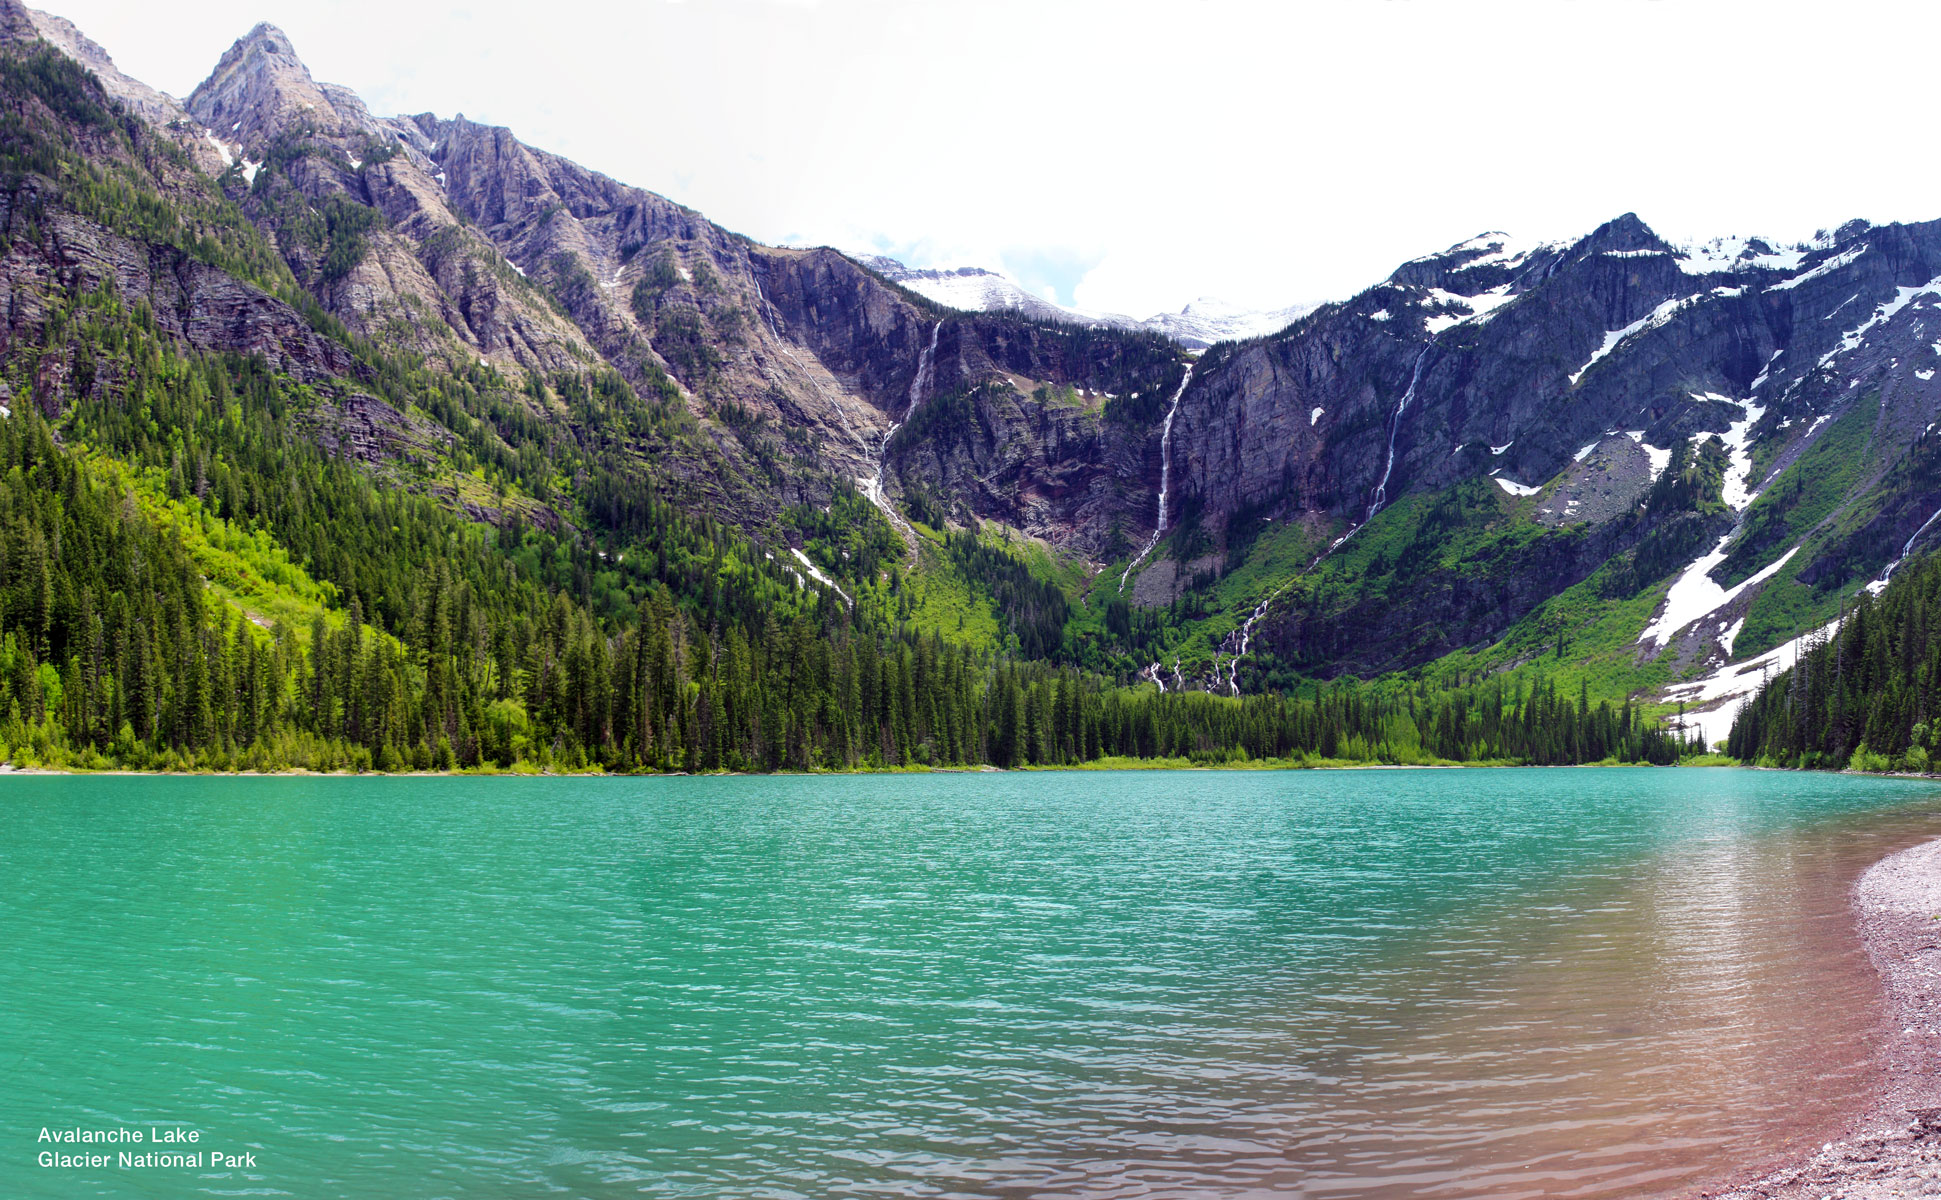 Avalanche Lake at Glacier National Park